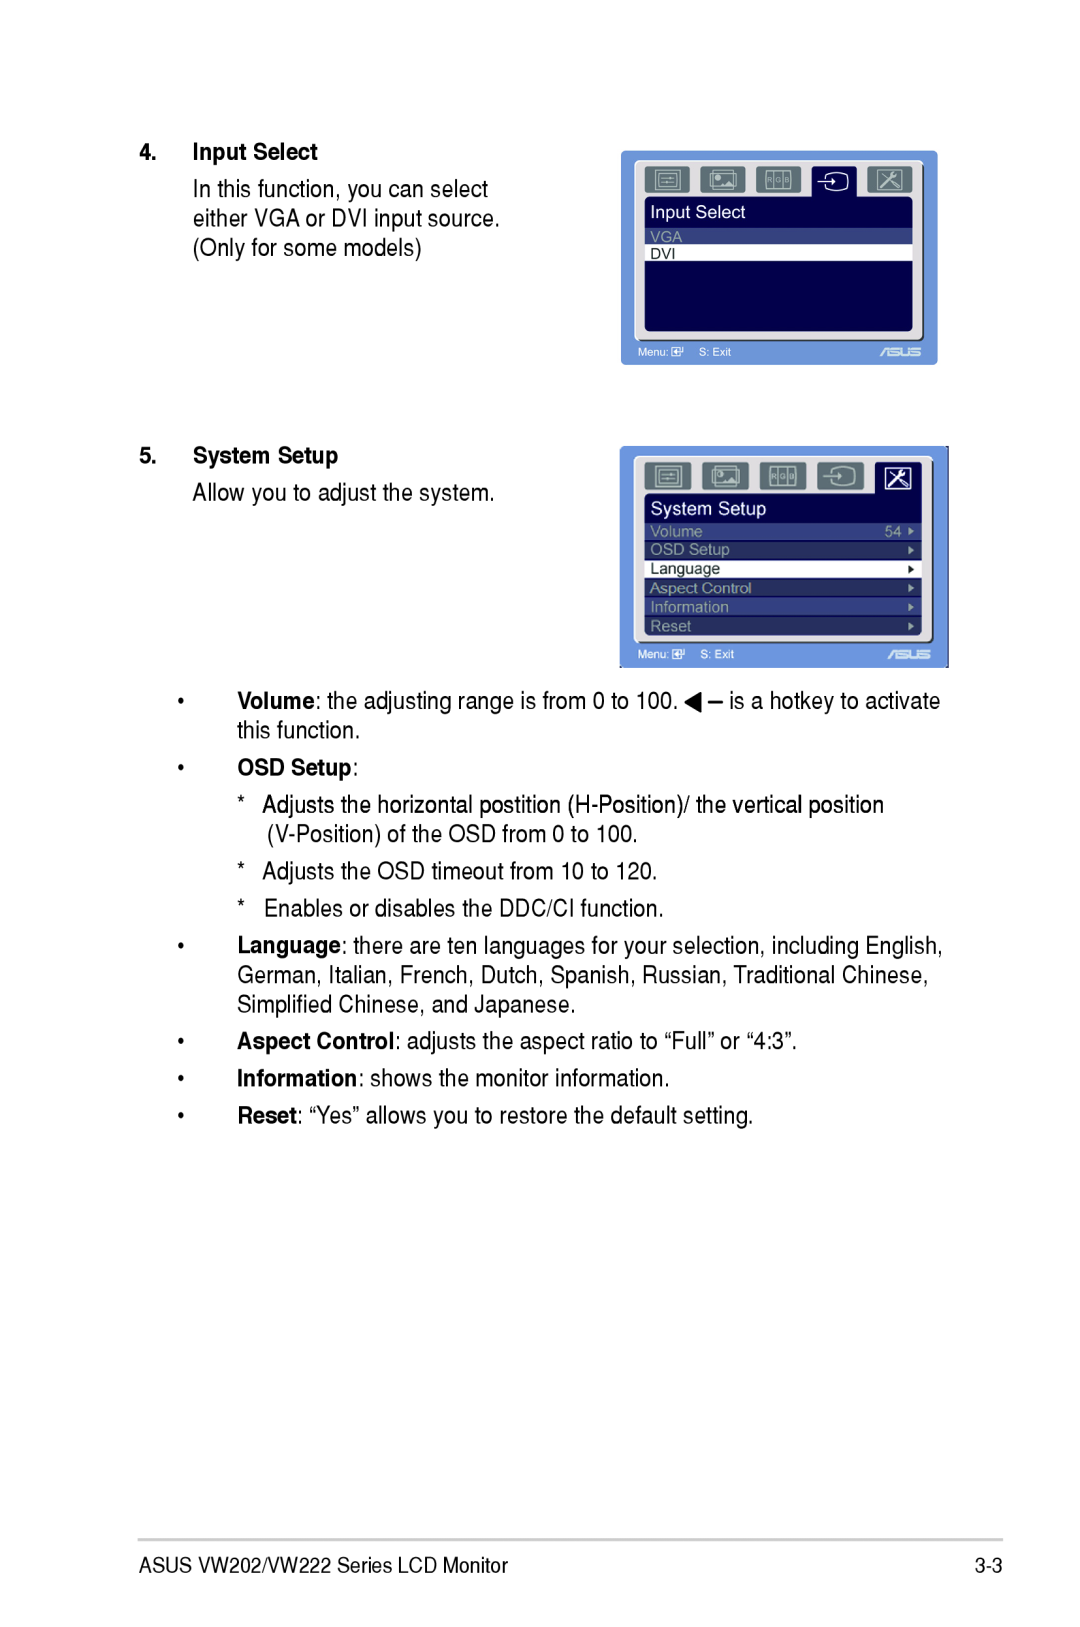 Asus VW222, VW202 manual Input Select, System Setup, OSD Setup 